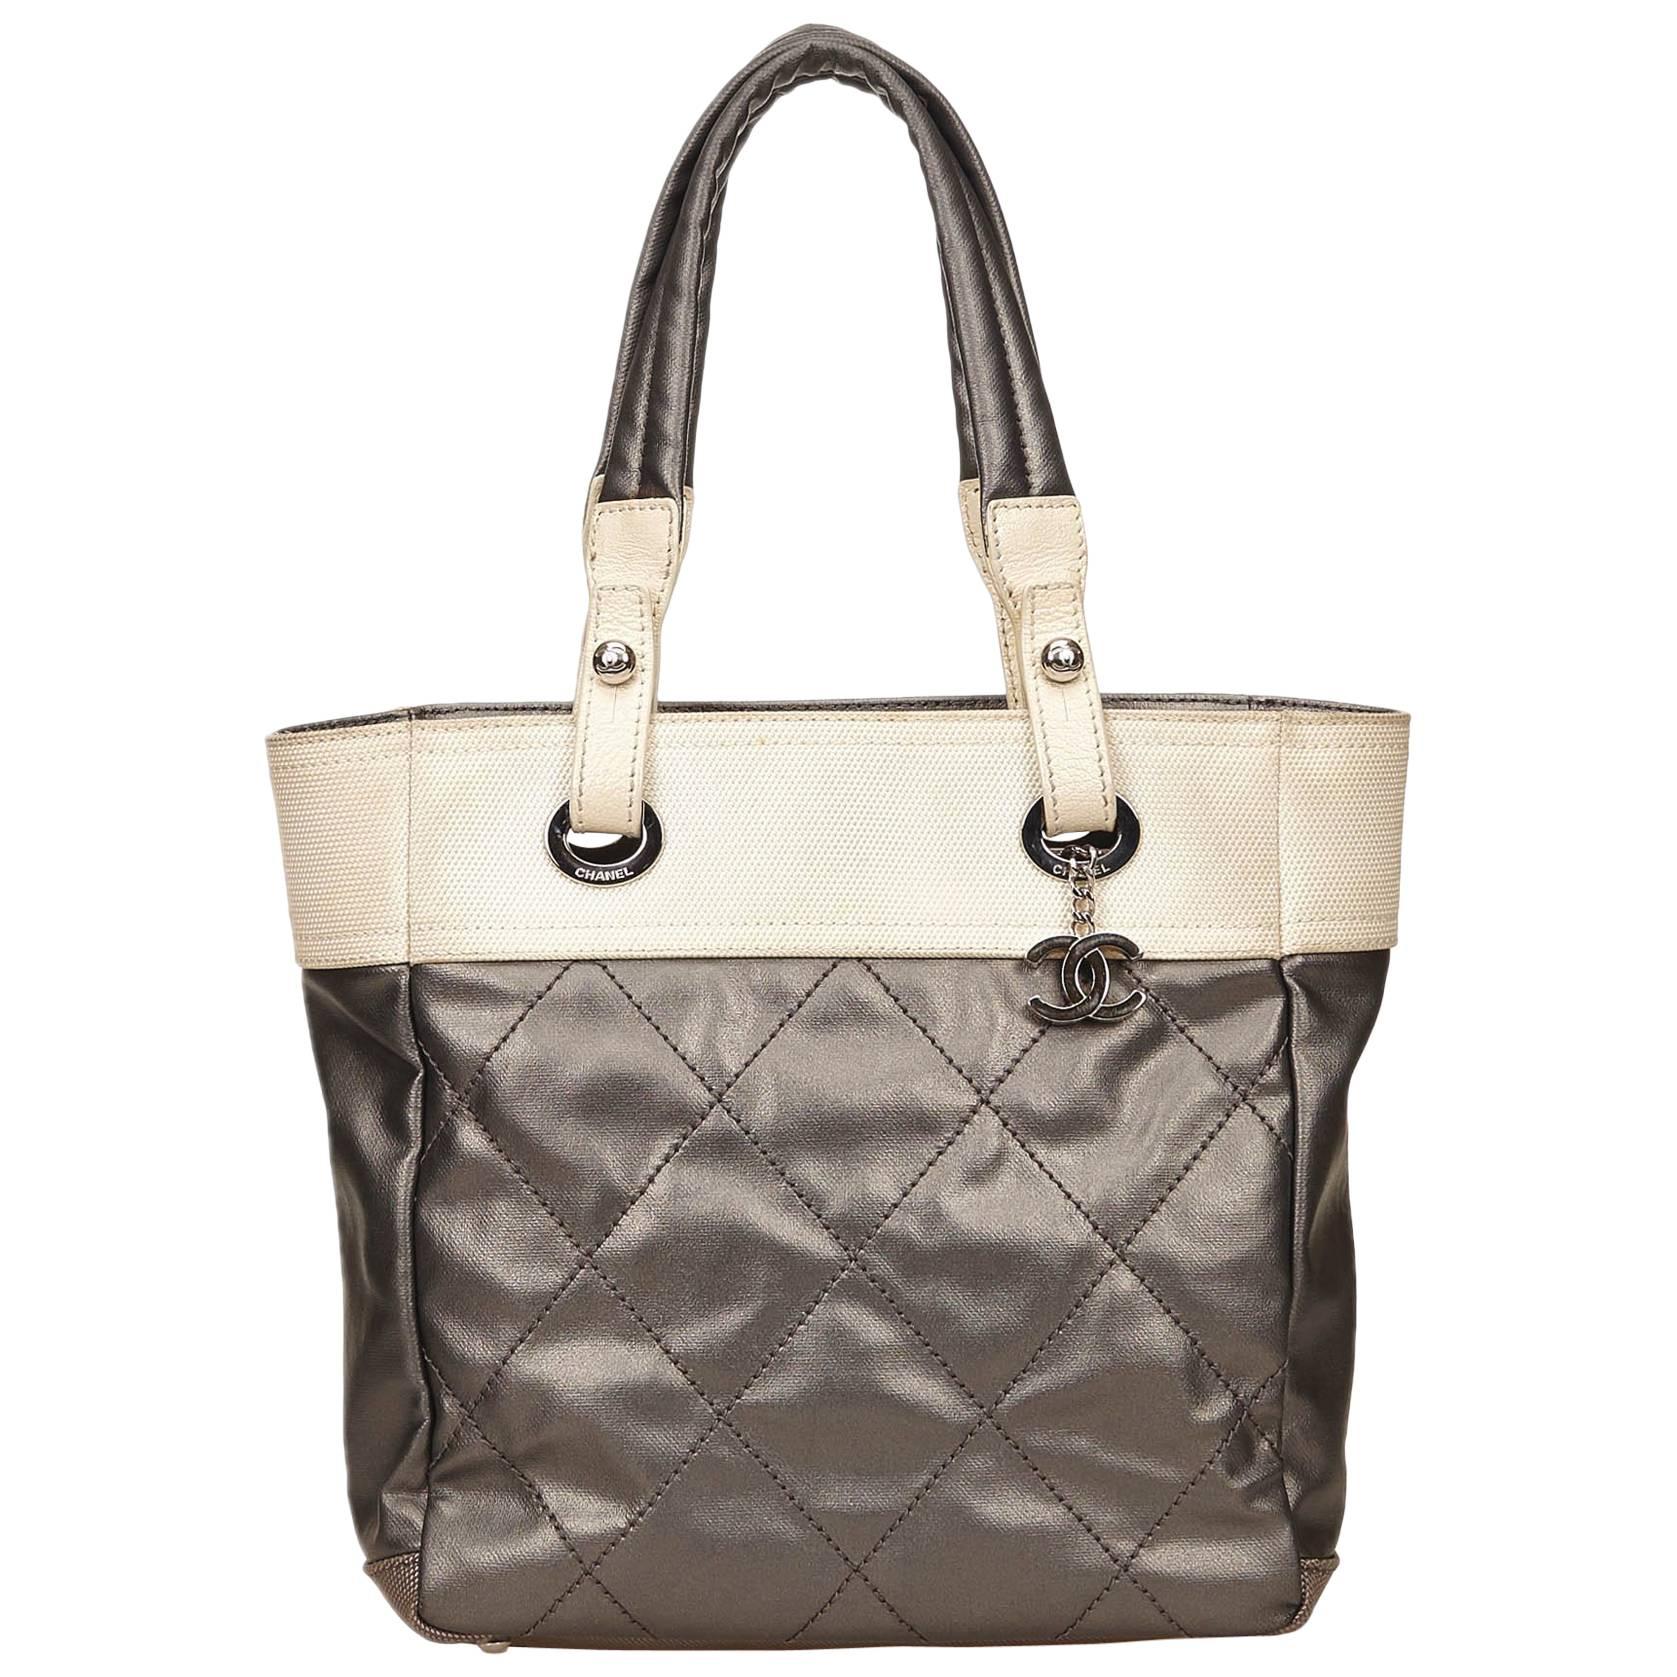 Grey & Ivory Chanel Paris Biarritz Tote Bag